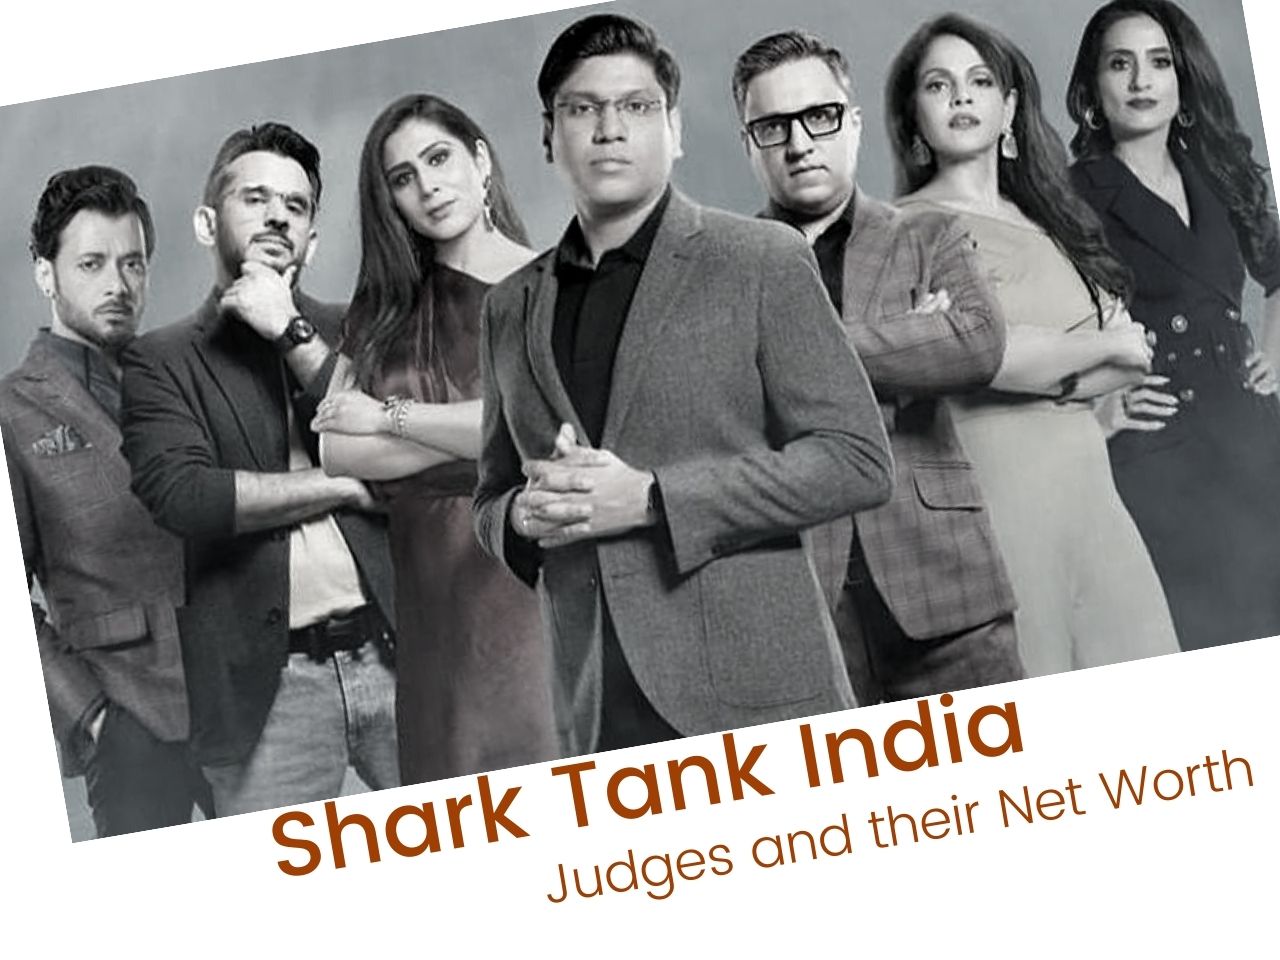 Shark Tank India judges and net worth